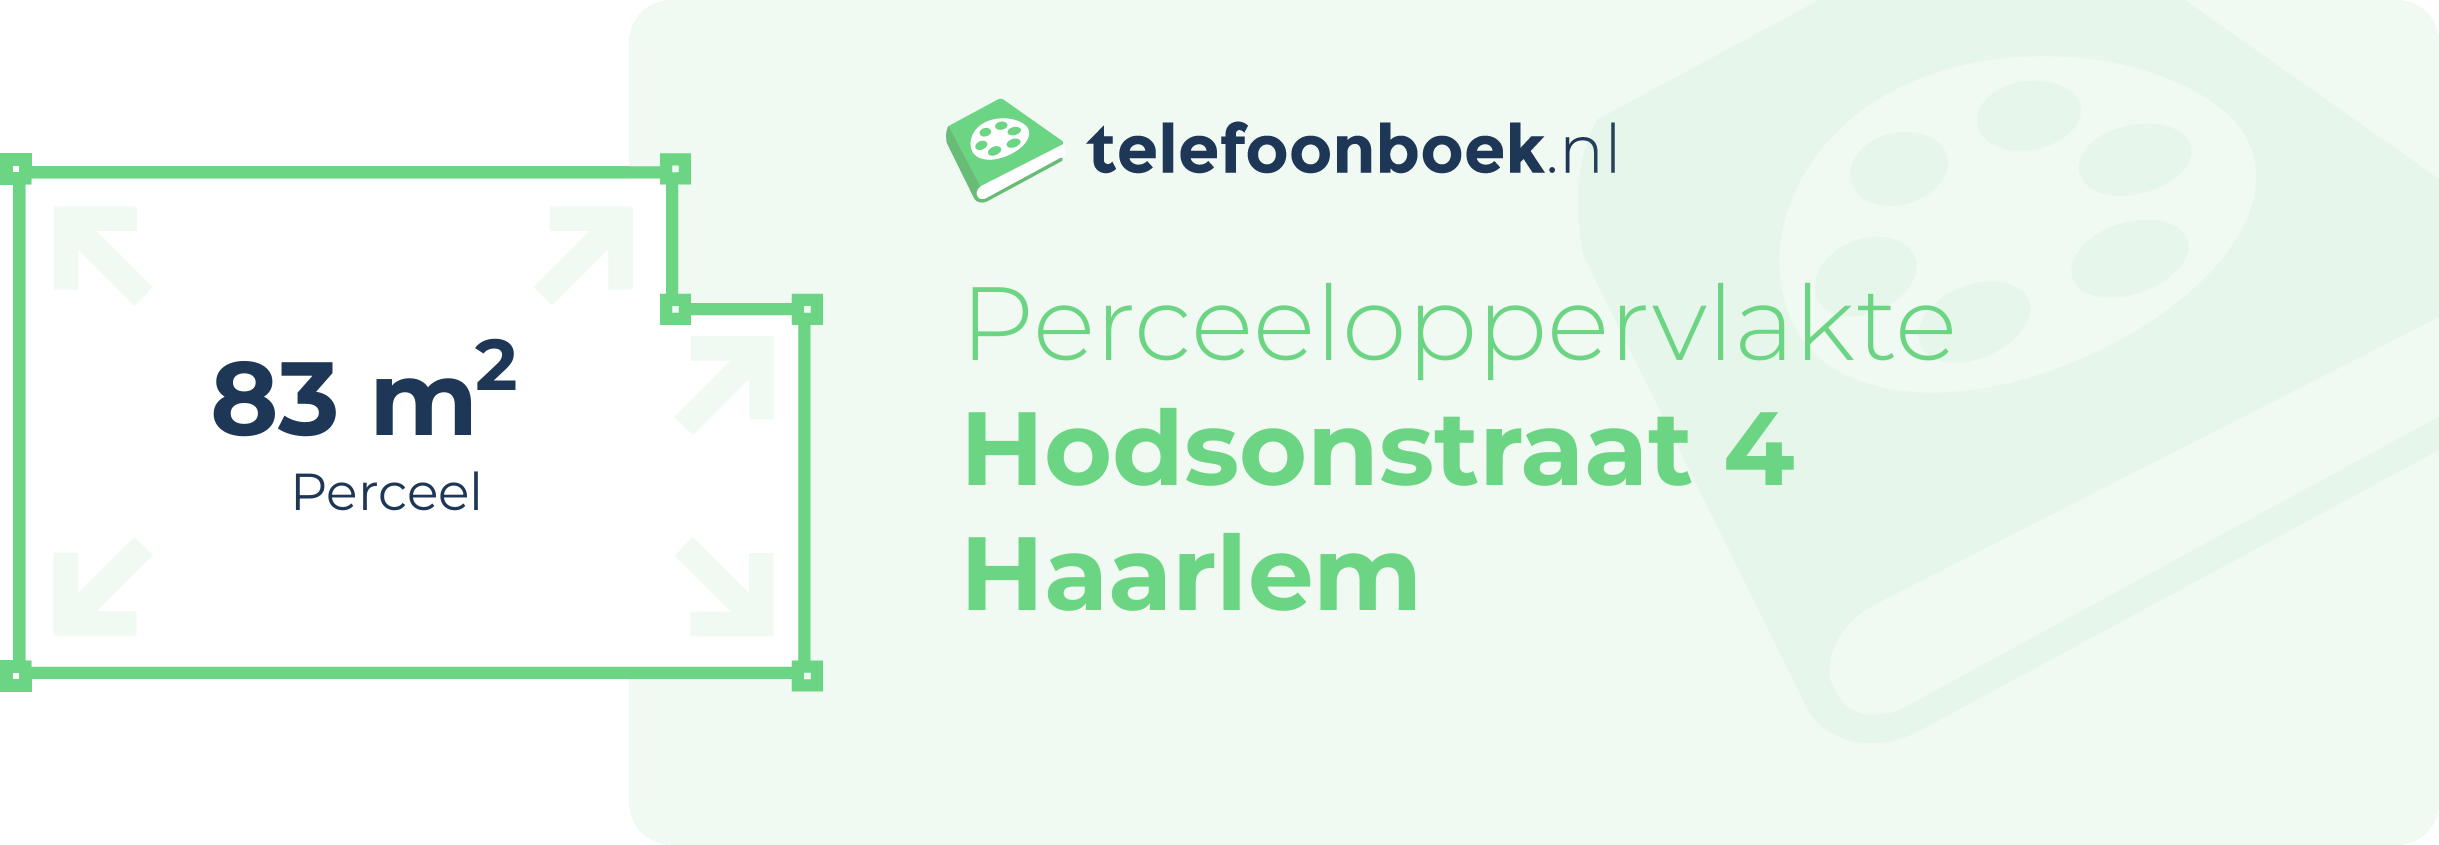 Perceeloppervlakte Hodsonstraat 4 Haarlem